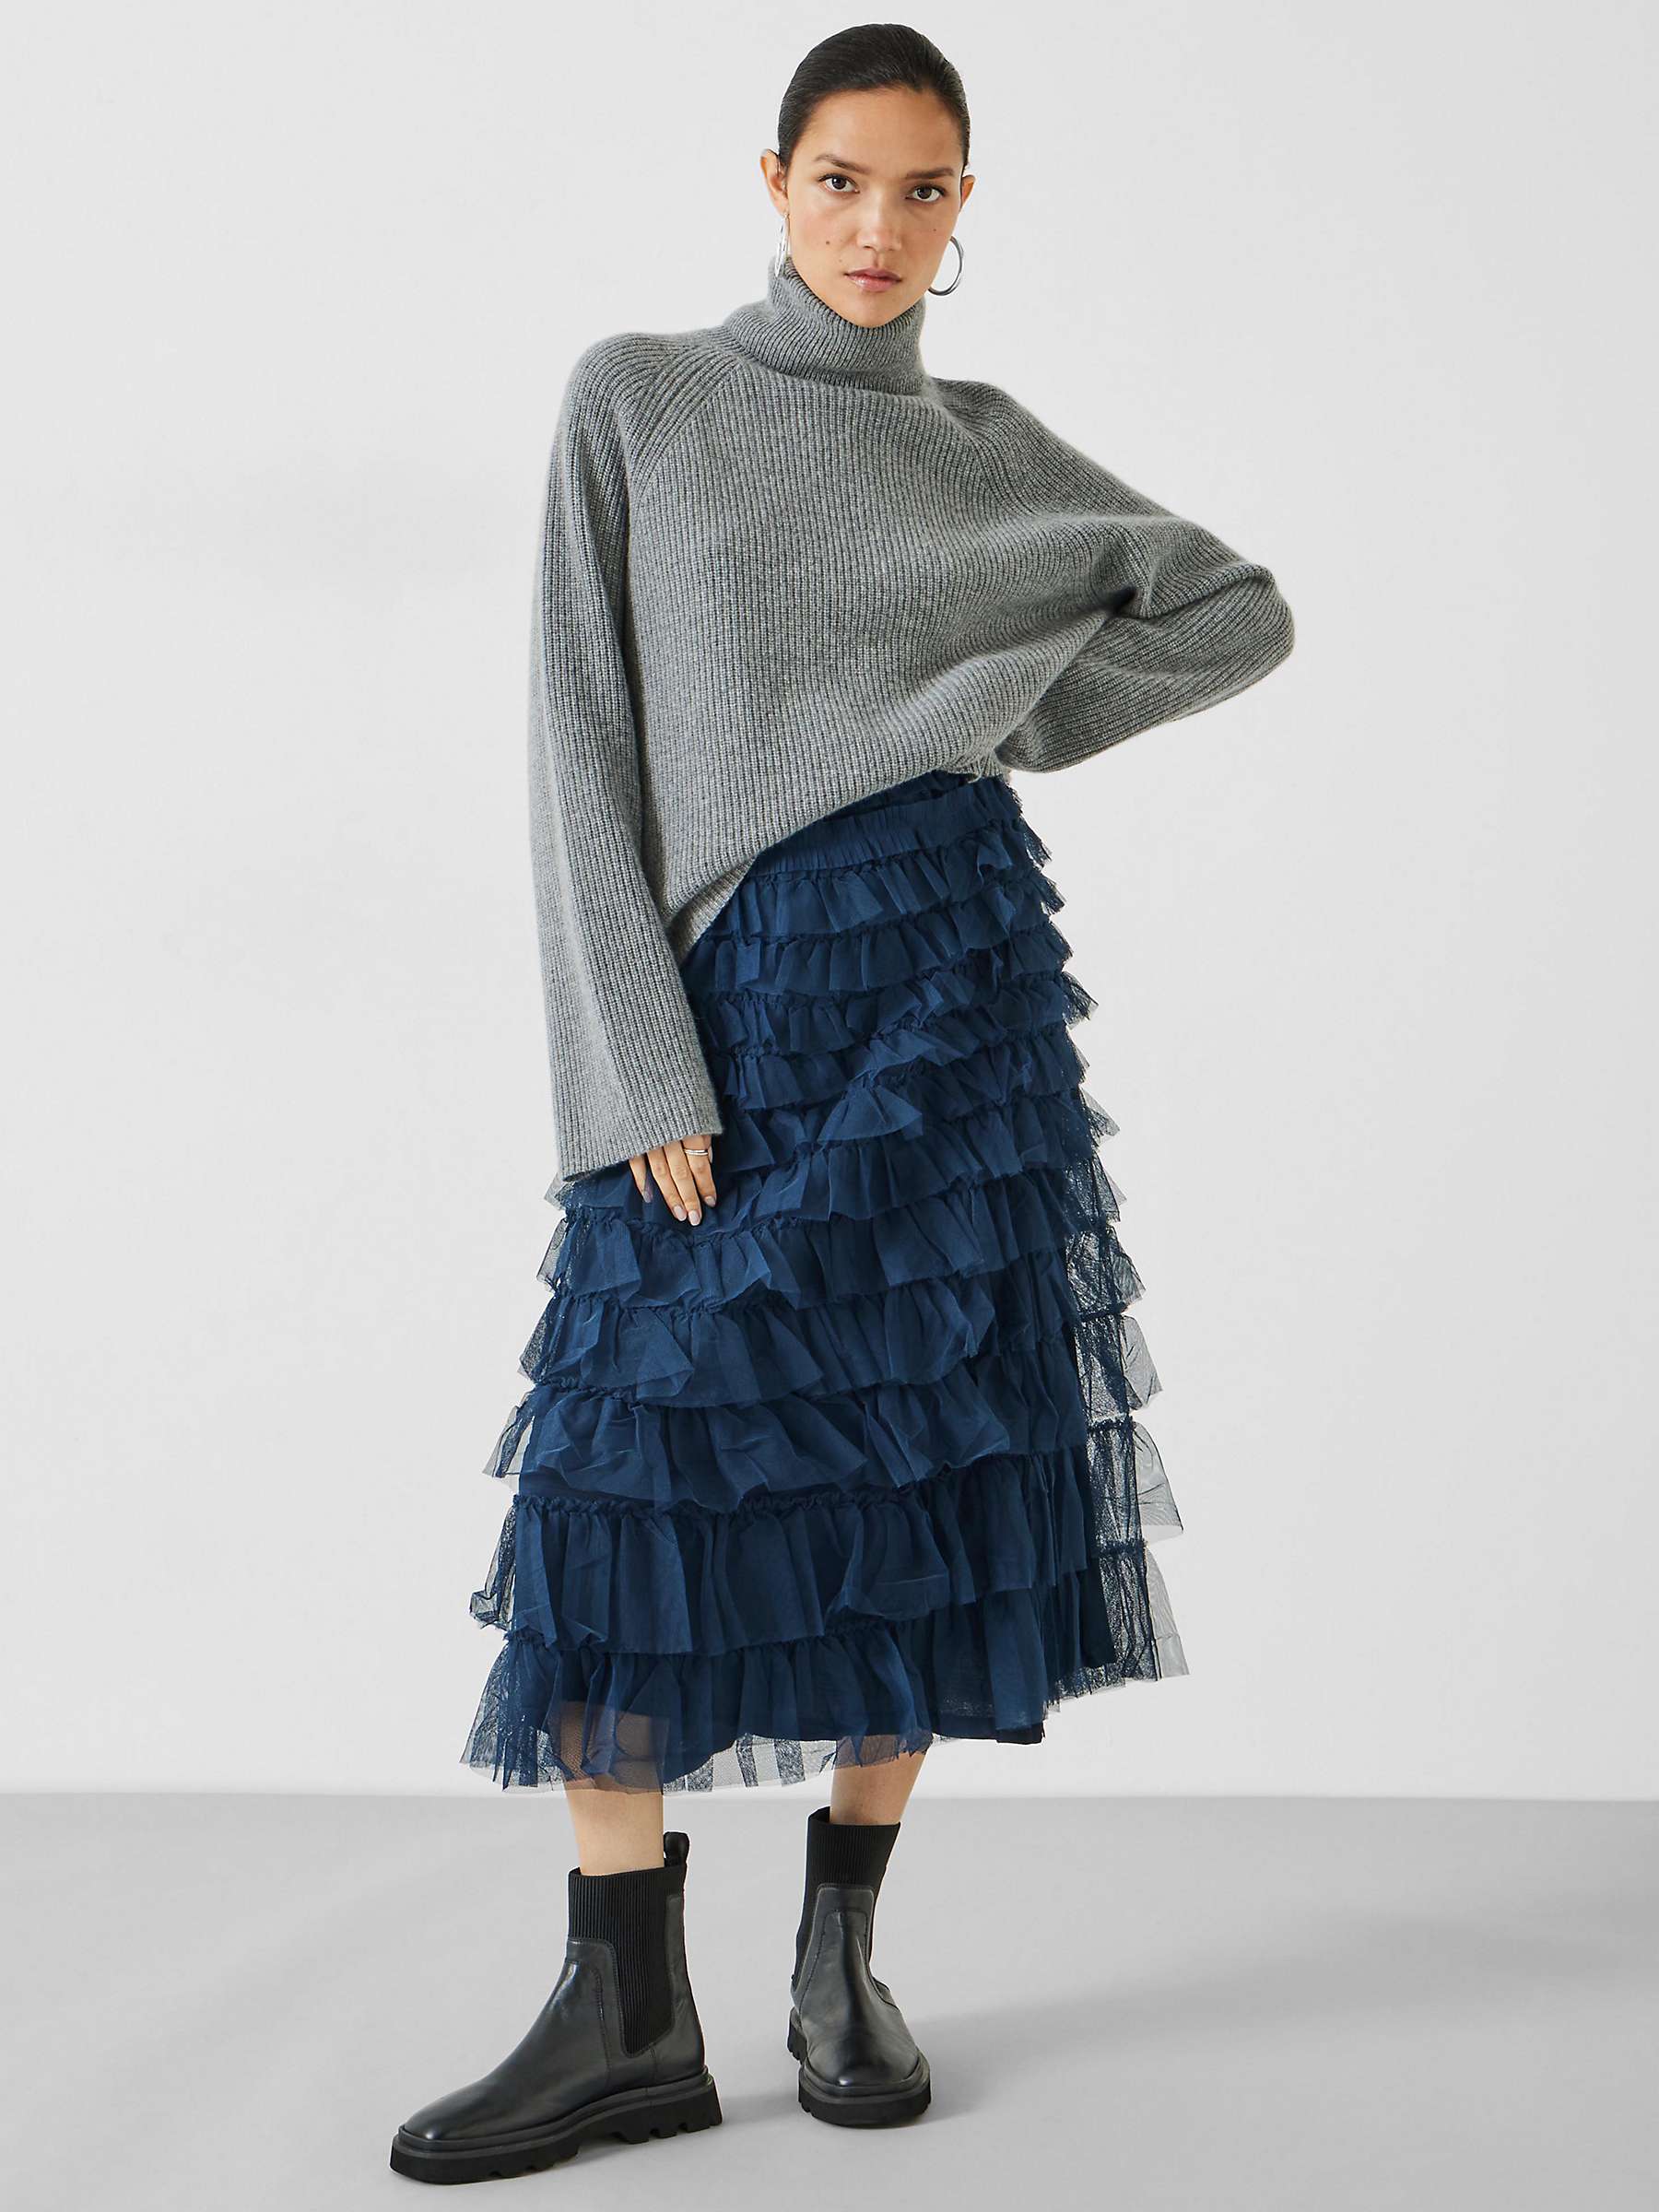 HUSH Florence Ruffle Skirt, Deep Teal at John Lewis & Partners